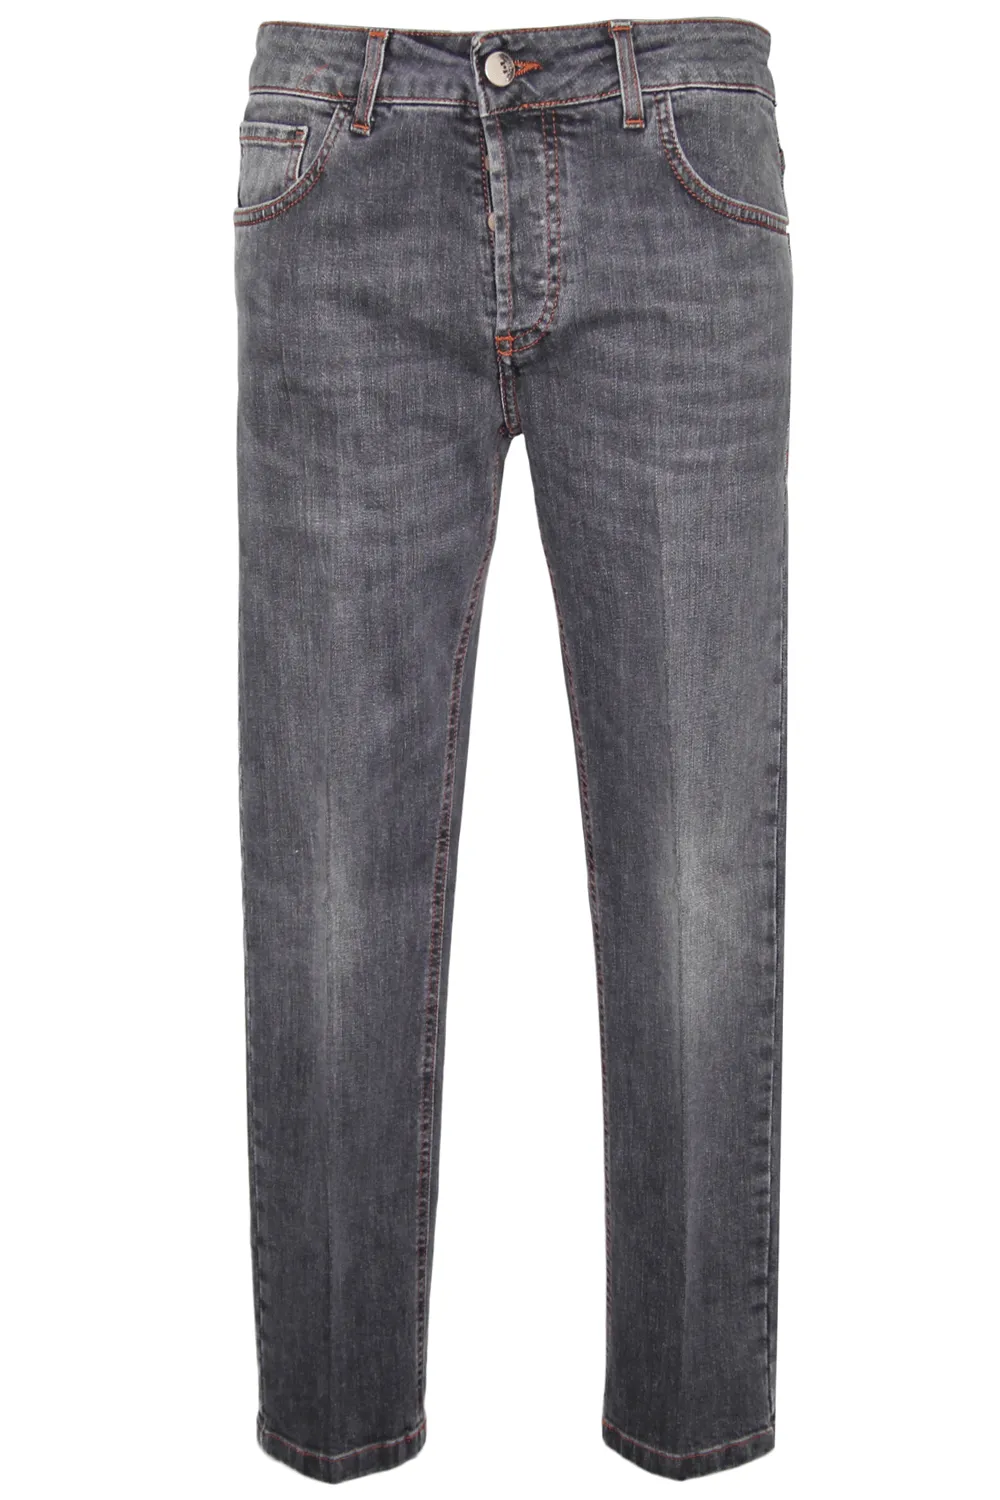 Pantalone jeans grigio- 